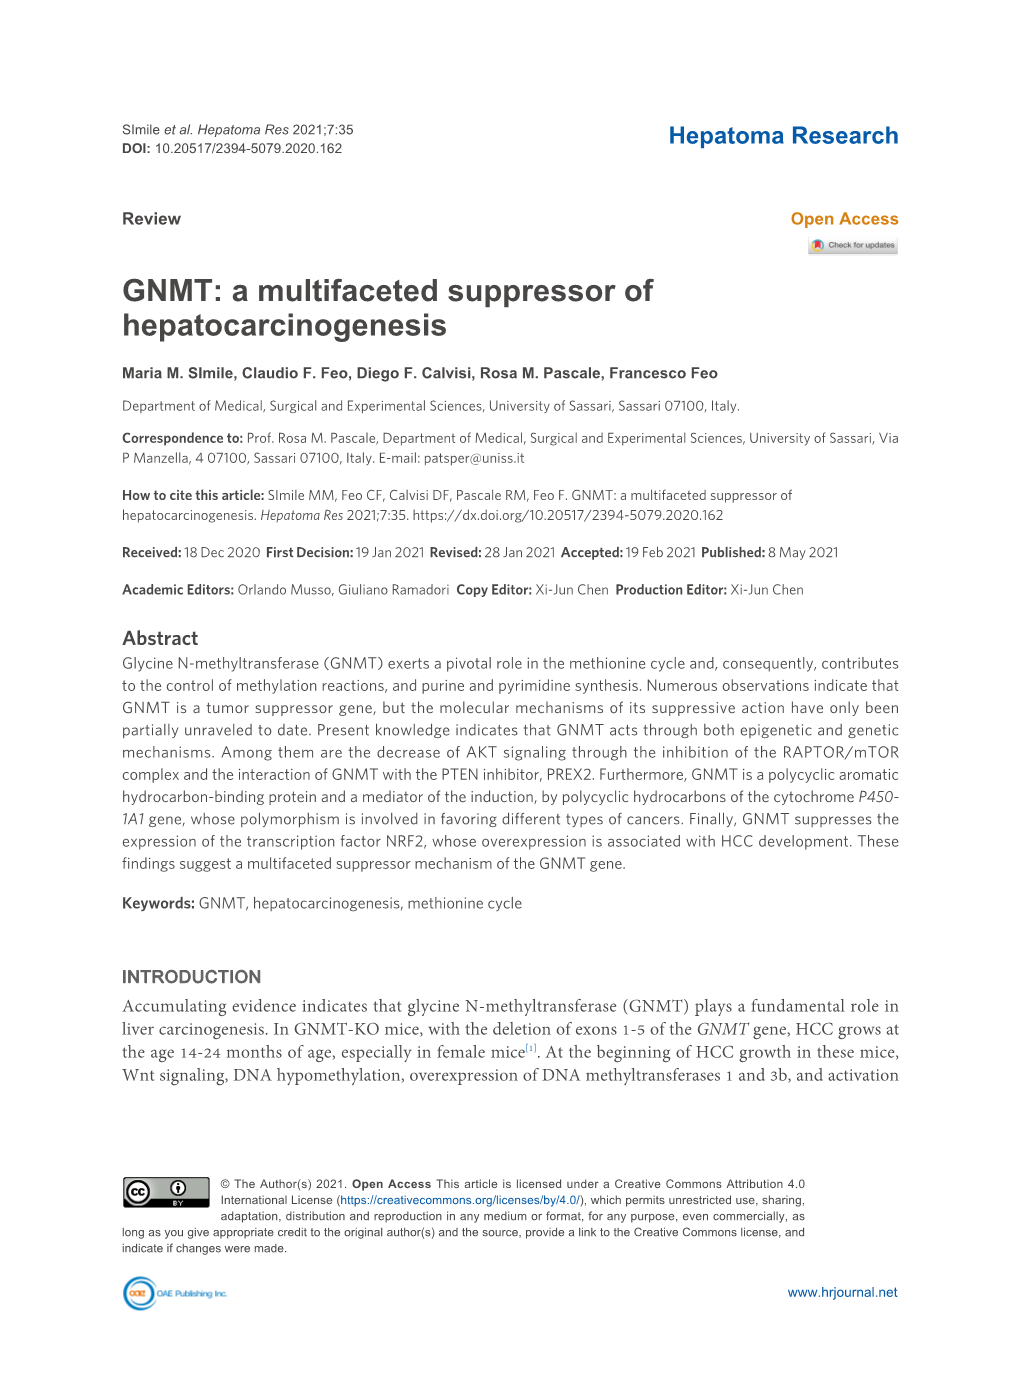 GNMT: a Multifaceted Suppressor of Hepatocarcinogenesis